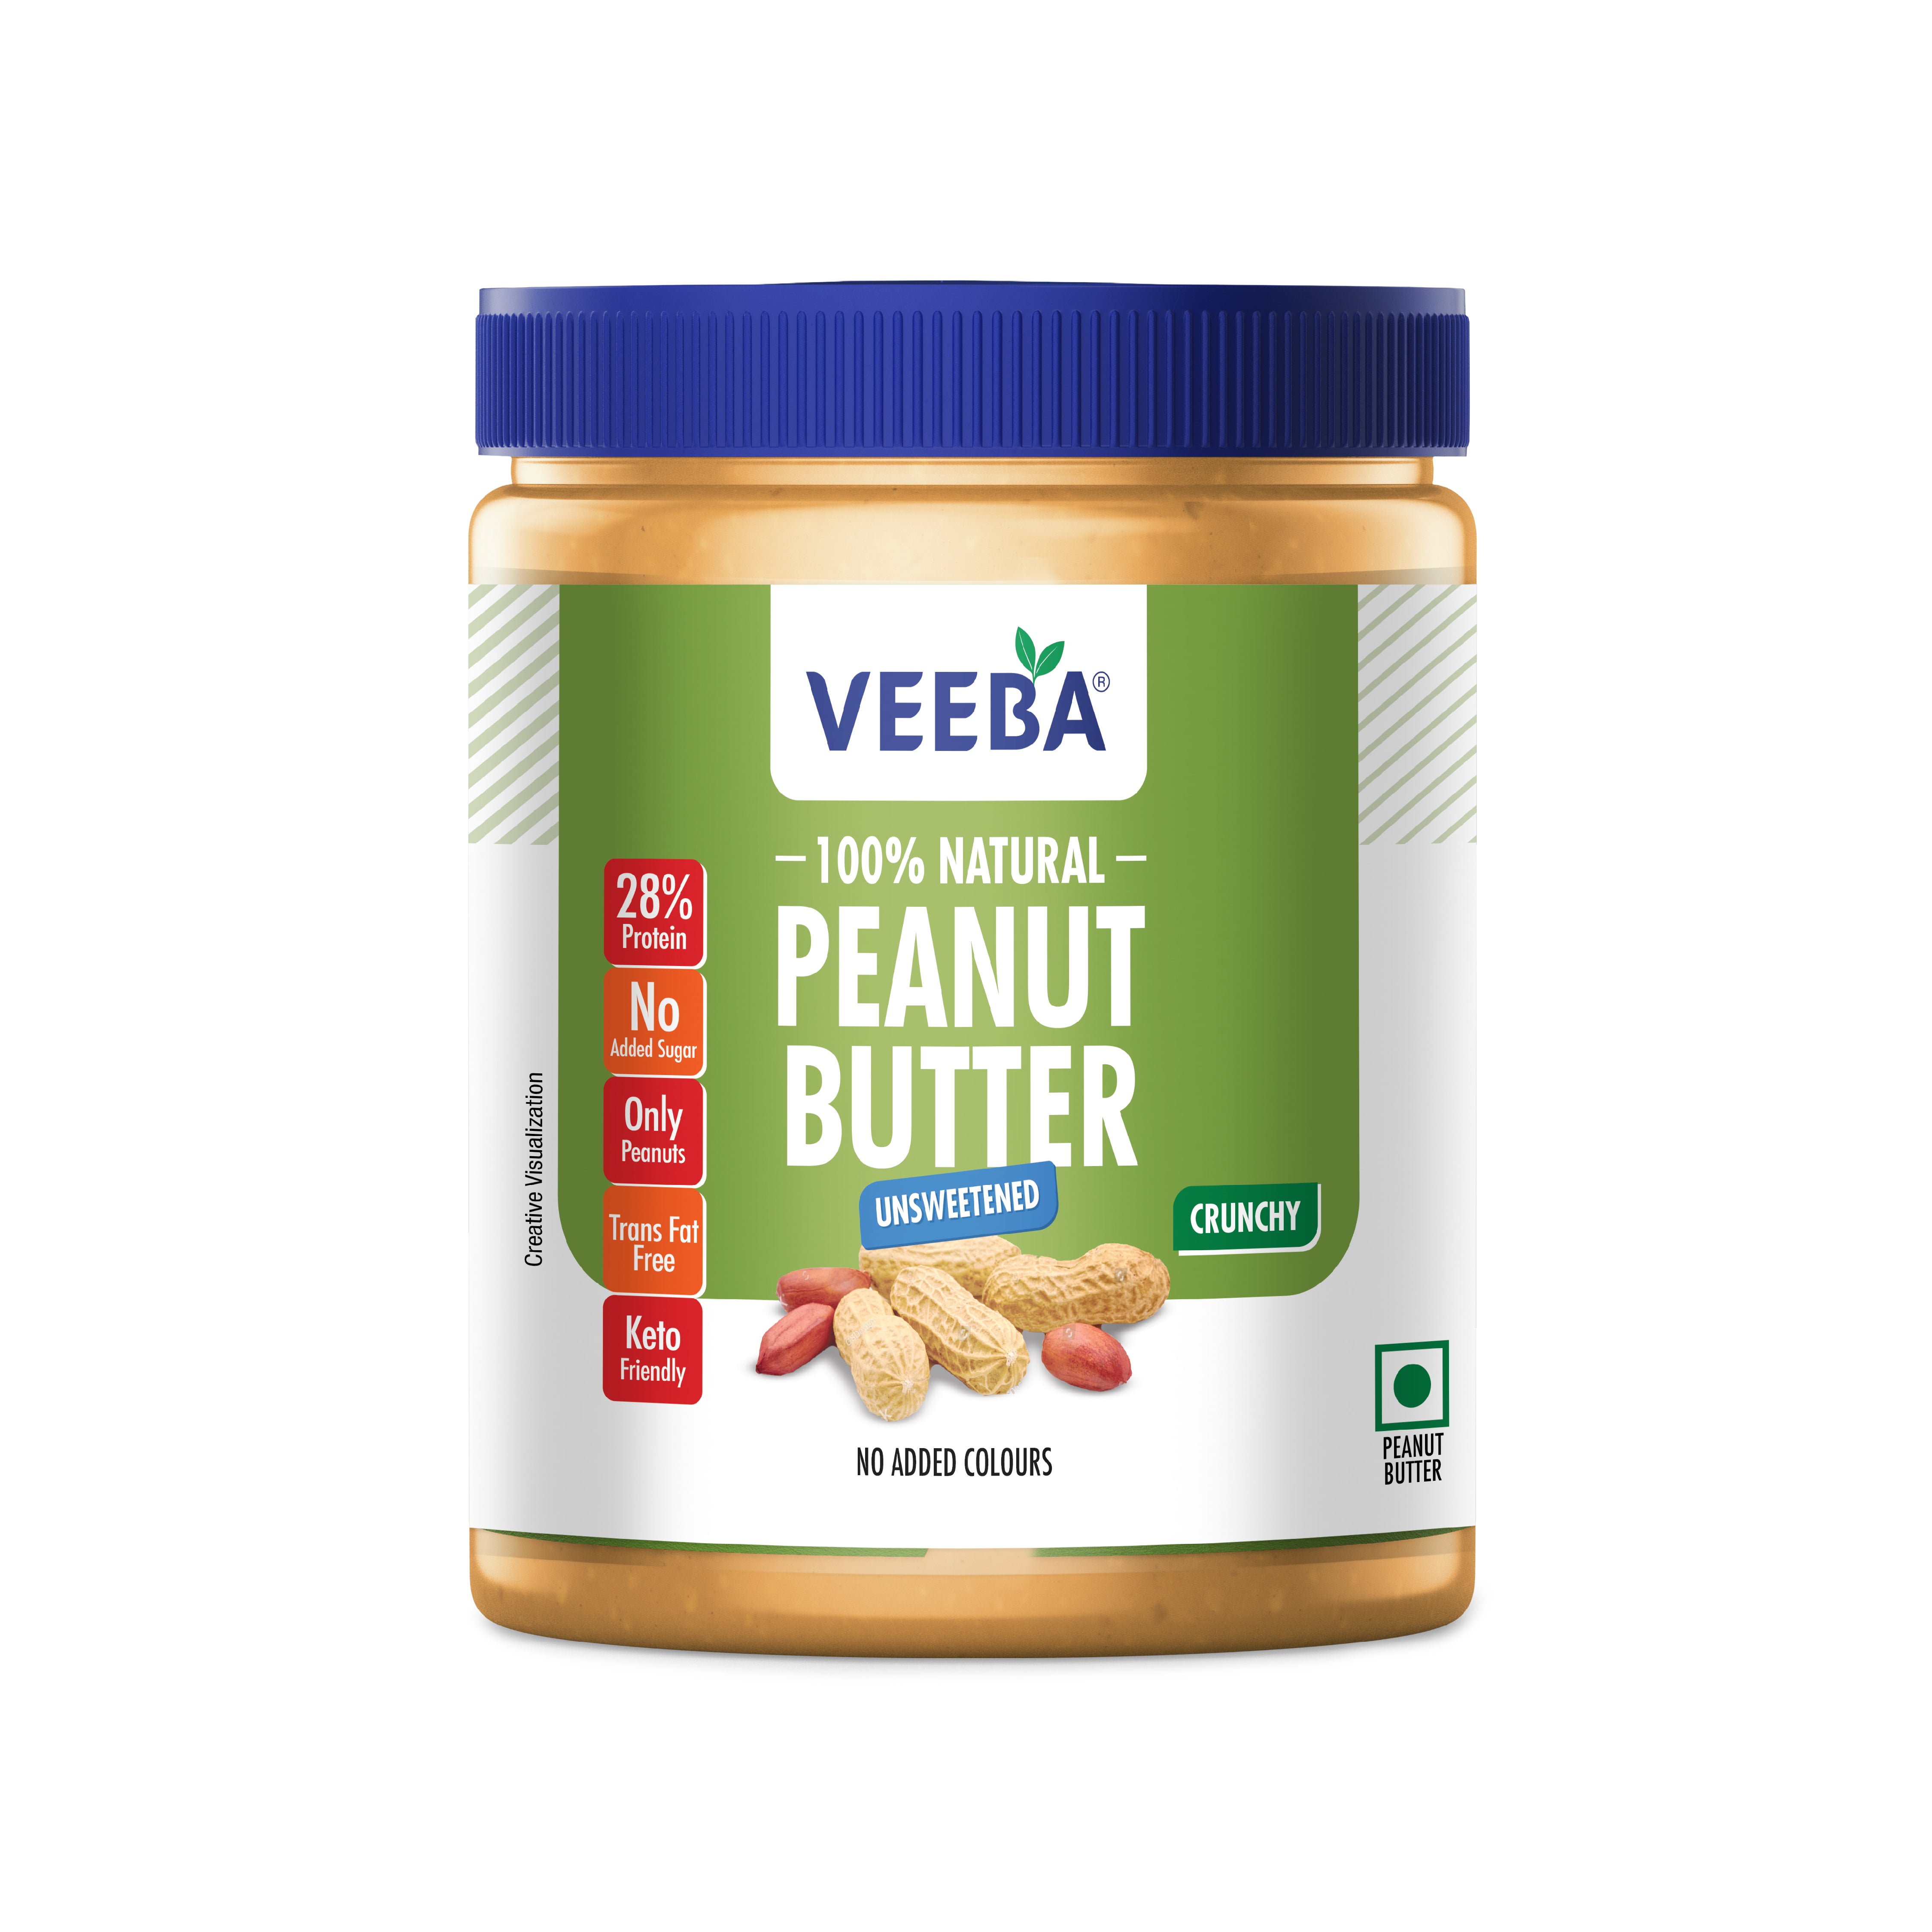 Veeba 100% Natural Peanut Butter (1 kg)